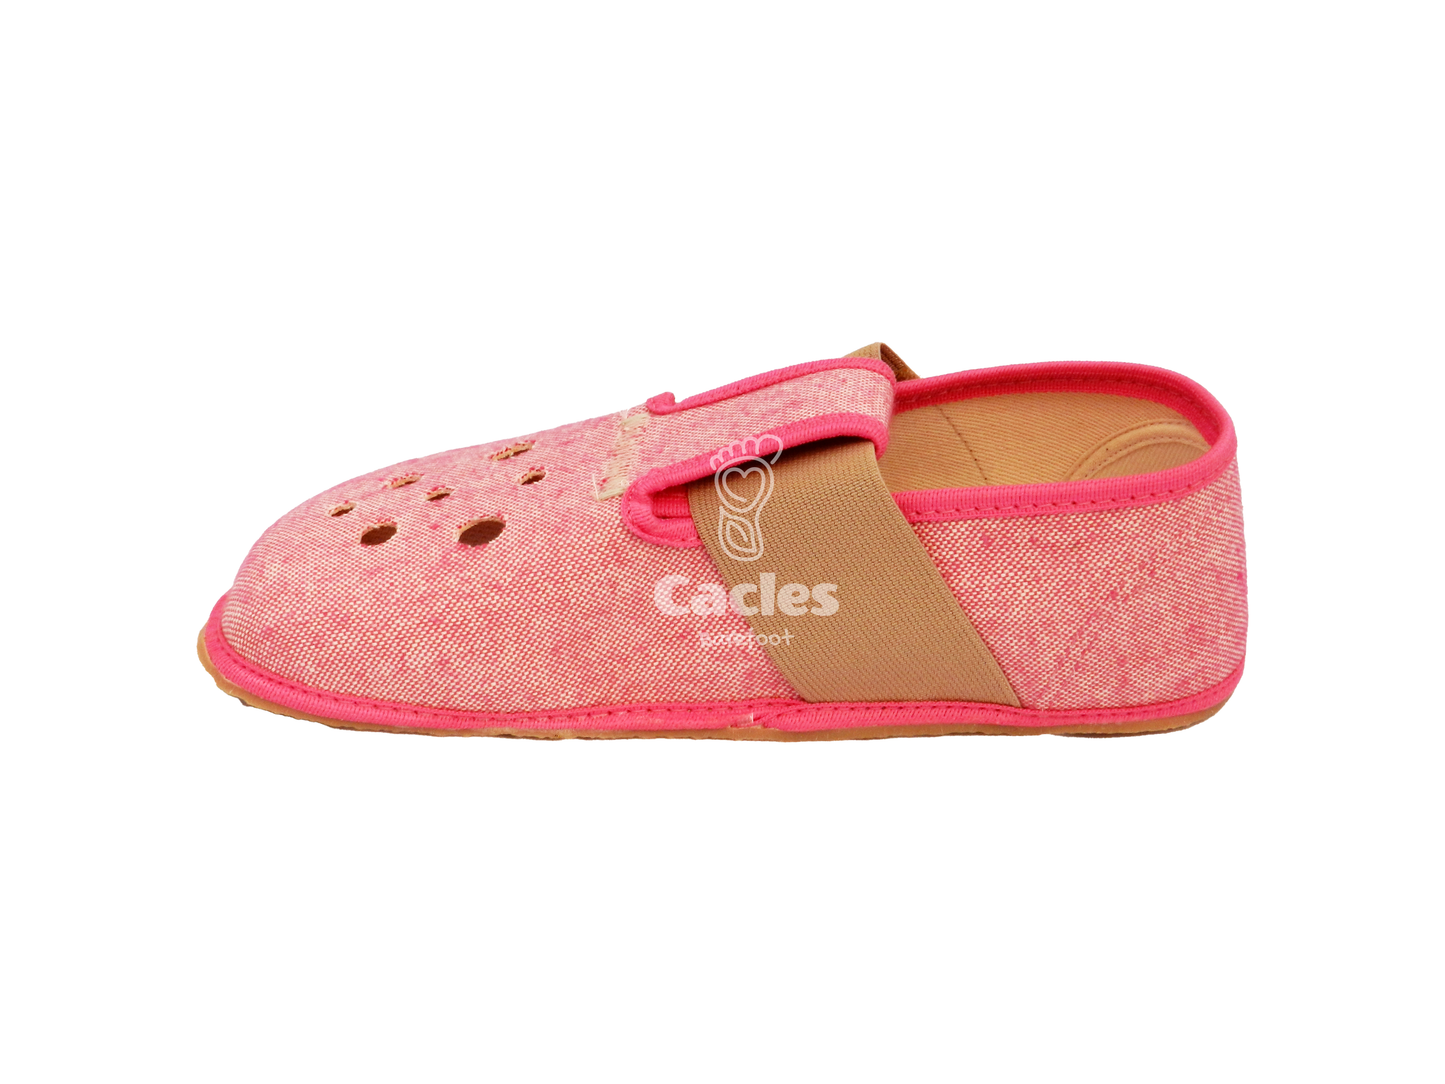 Pegres zapatillas algodón rosa-Pegres-Cacles Barefoot